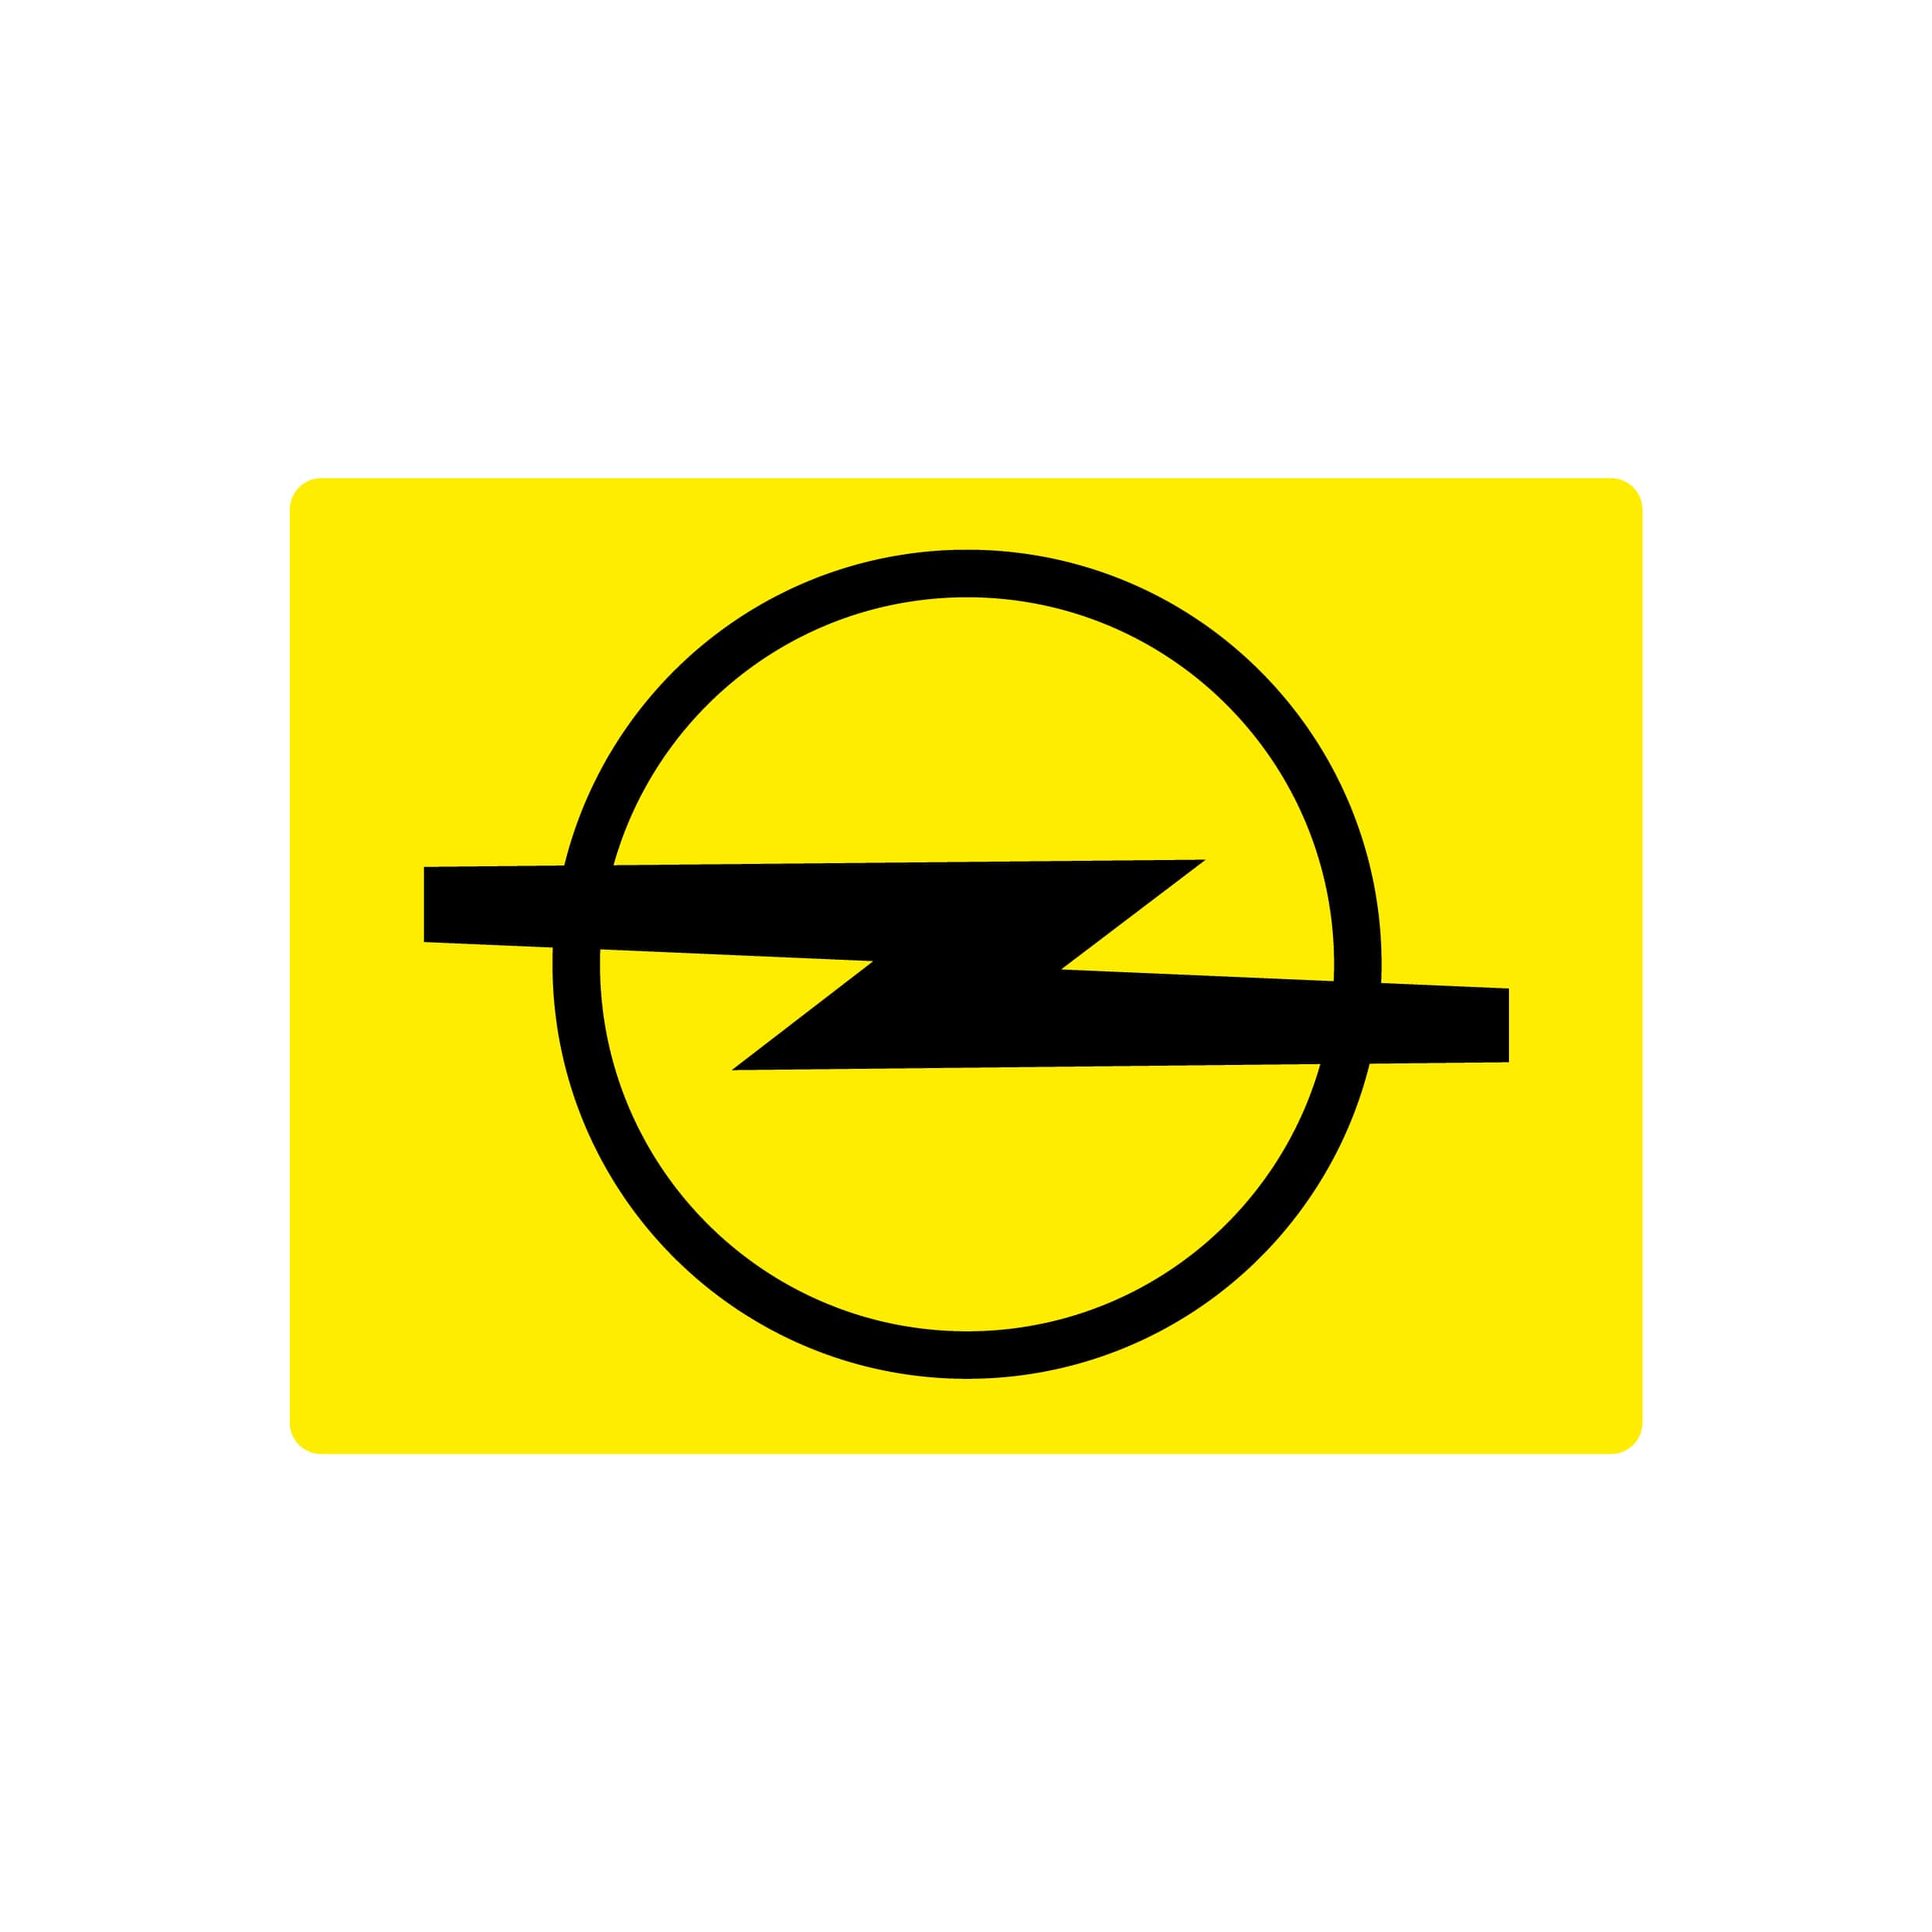 stickers-opel-ref7-autocollant-voiture-sticker-auto-autocollants-decals-sponsors-racing-tuning-sport-logo-min-min